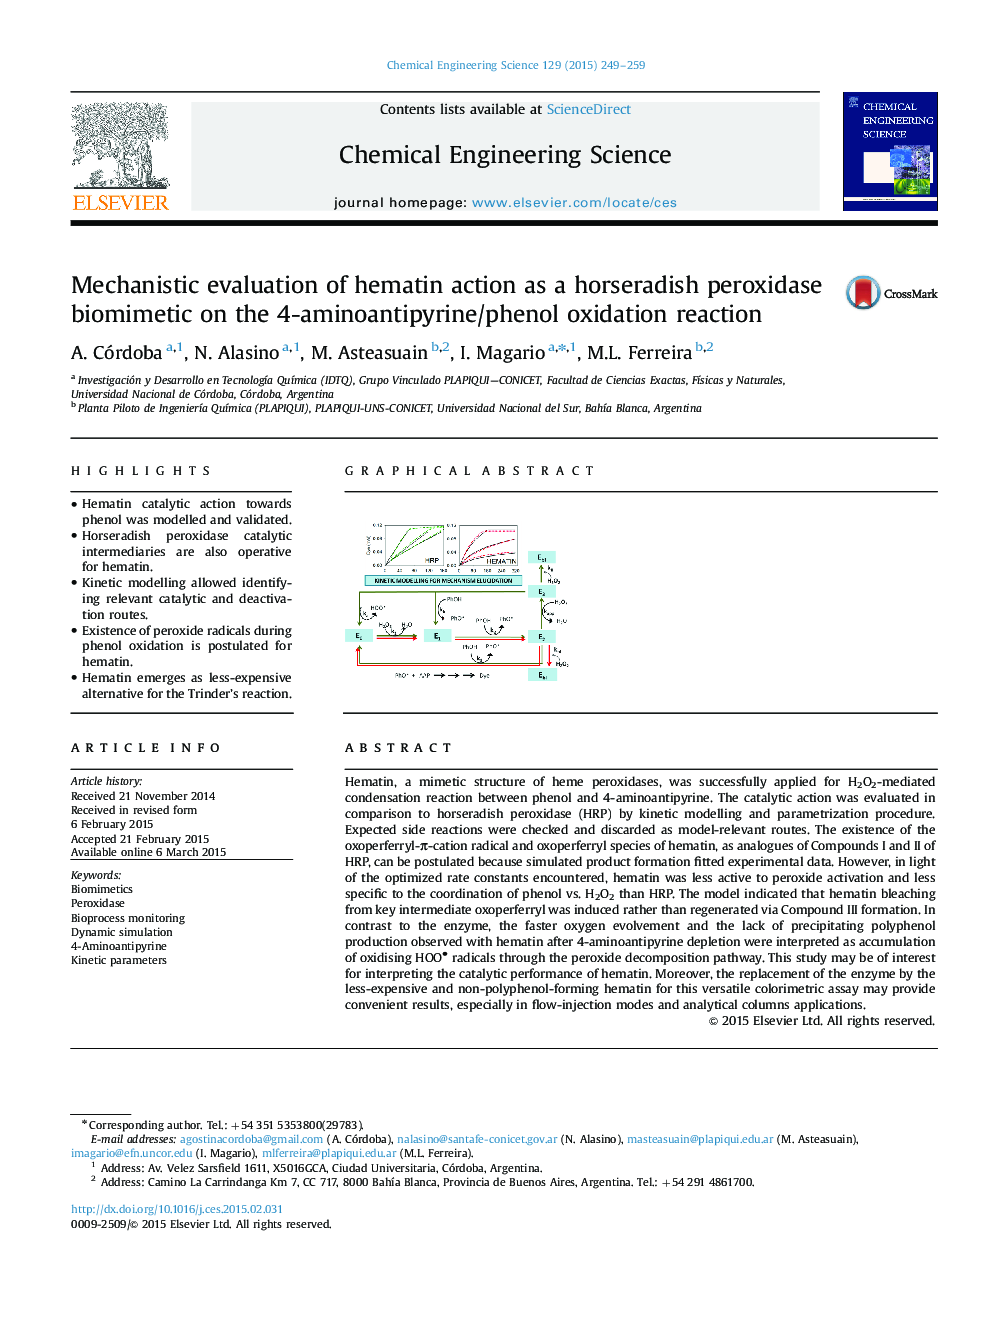 Mechanistic evaluation of hematin action as a horseradish peroxidase biomimetic on the 4-aminoantipyrine/phenol oxidation reaction